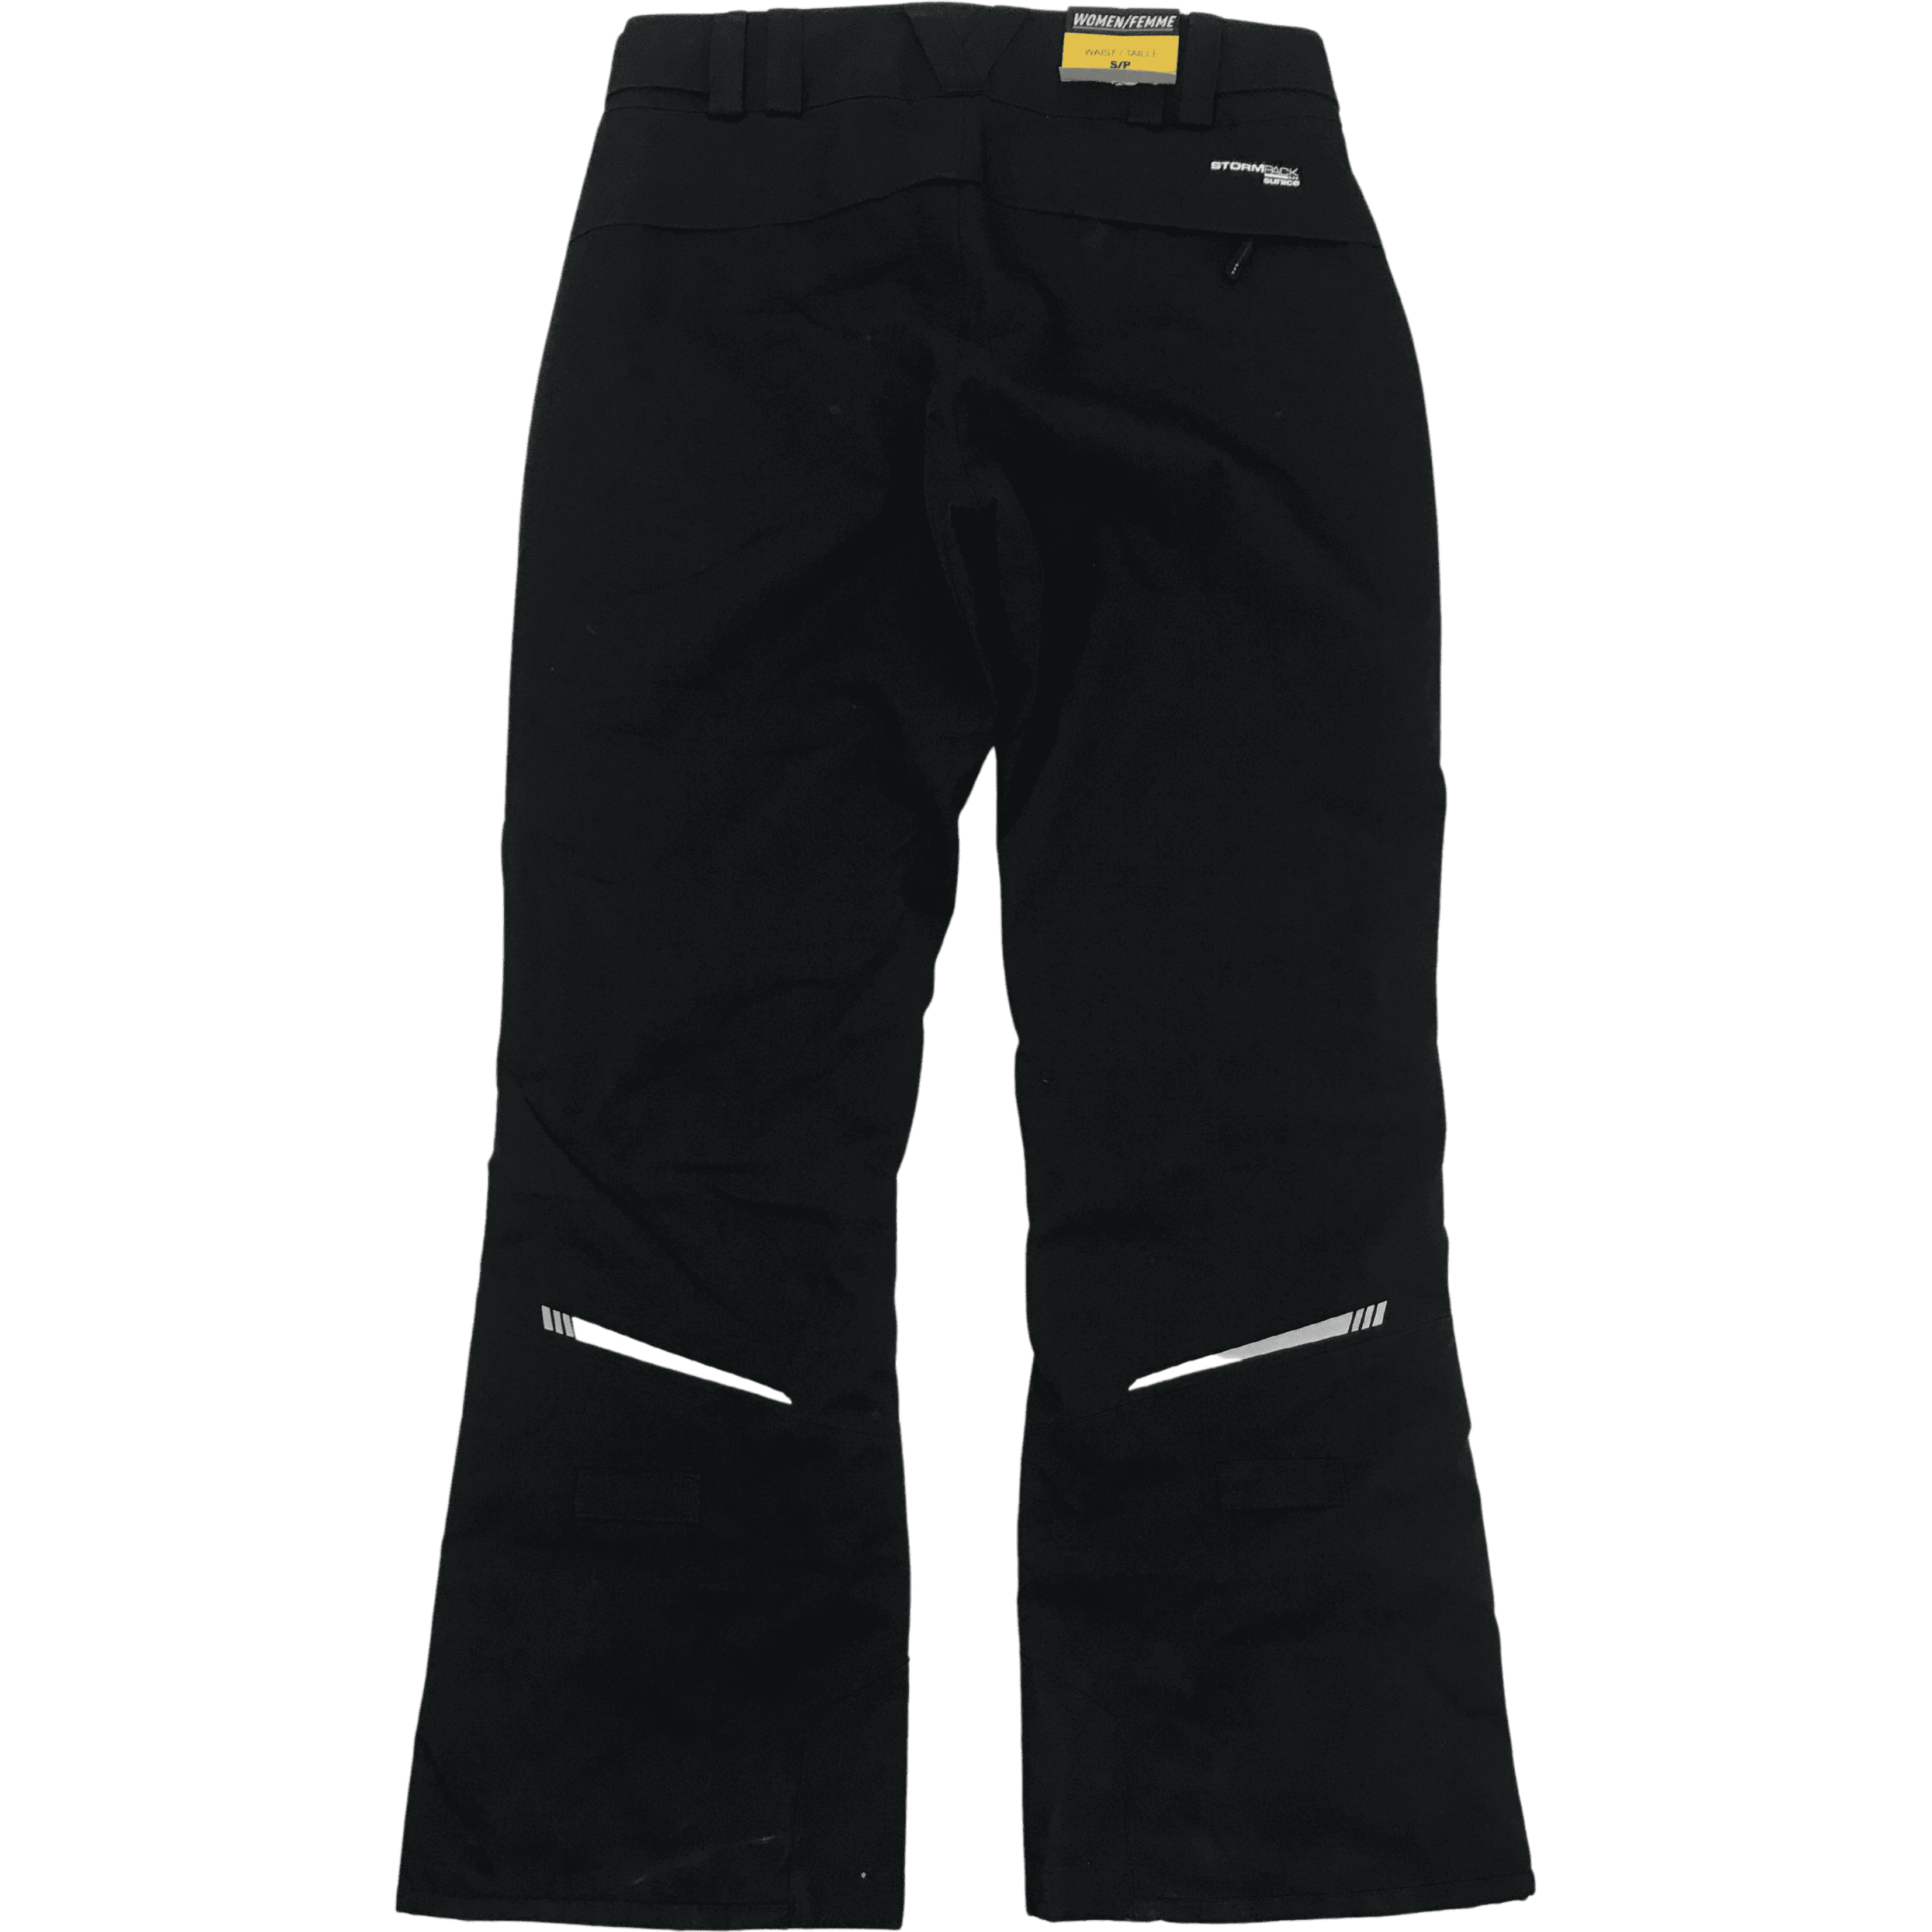 Sunice Stormpack Snow Ski Pants Women's Size XL x 31 Black with